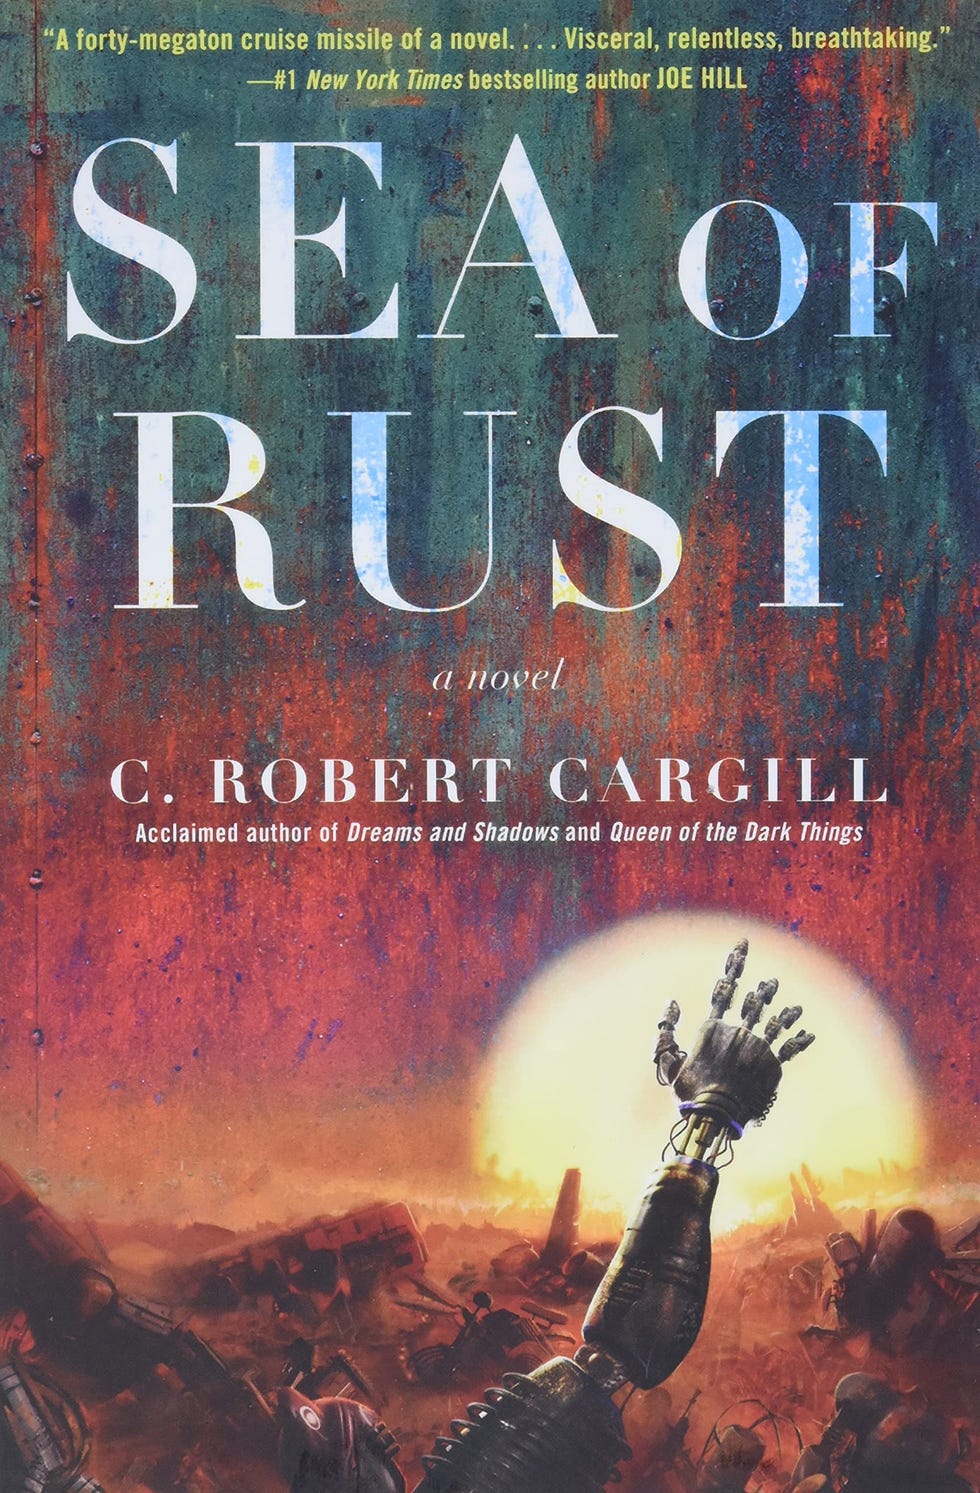 Sea of Rust, by C. Robert Cargill